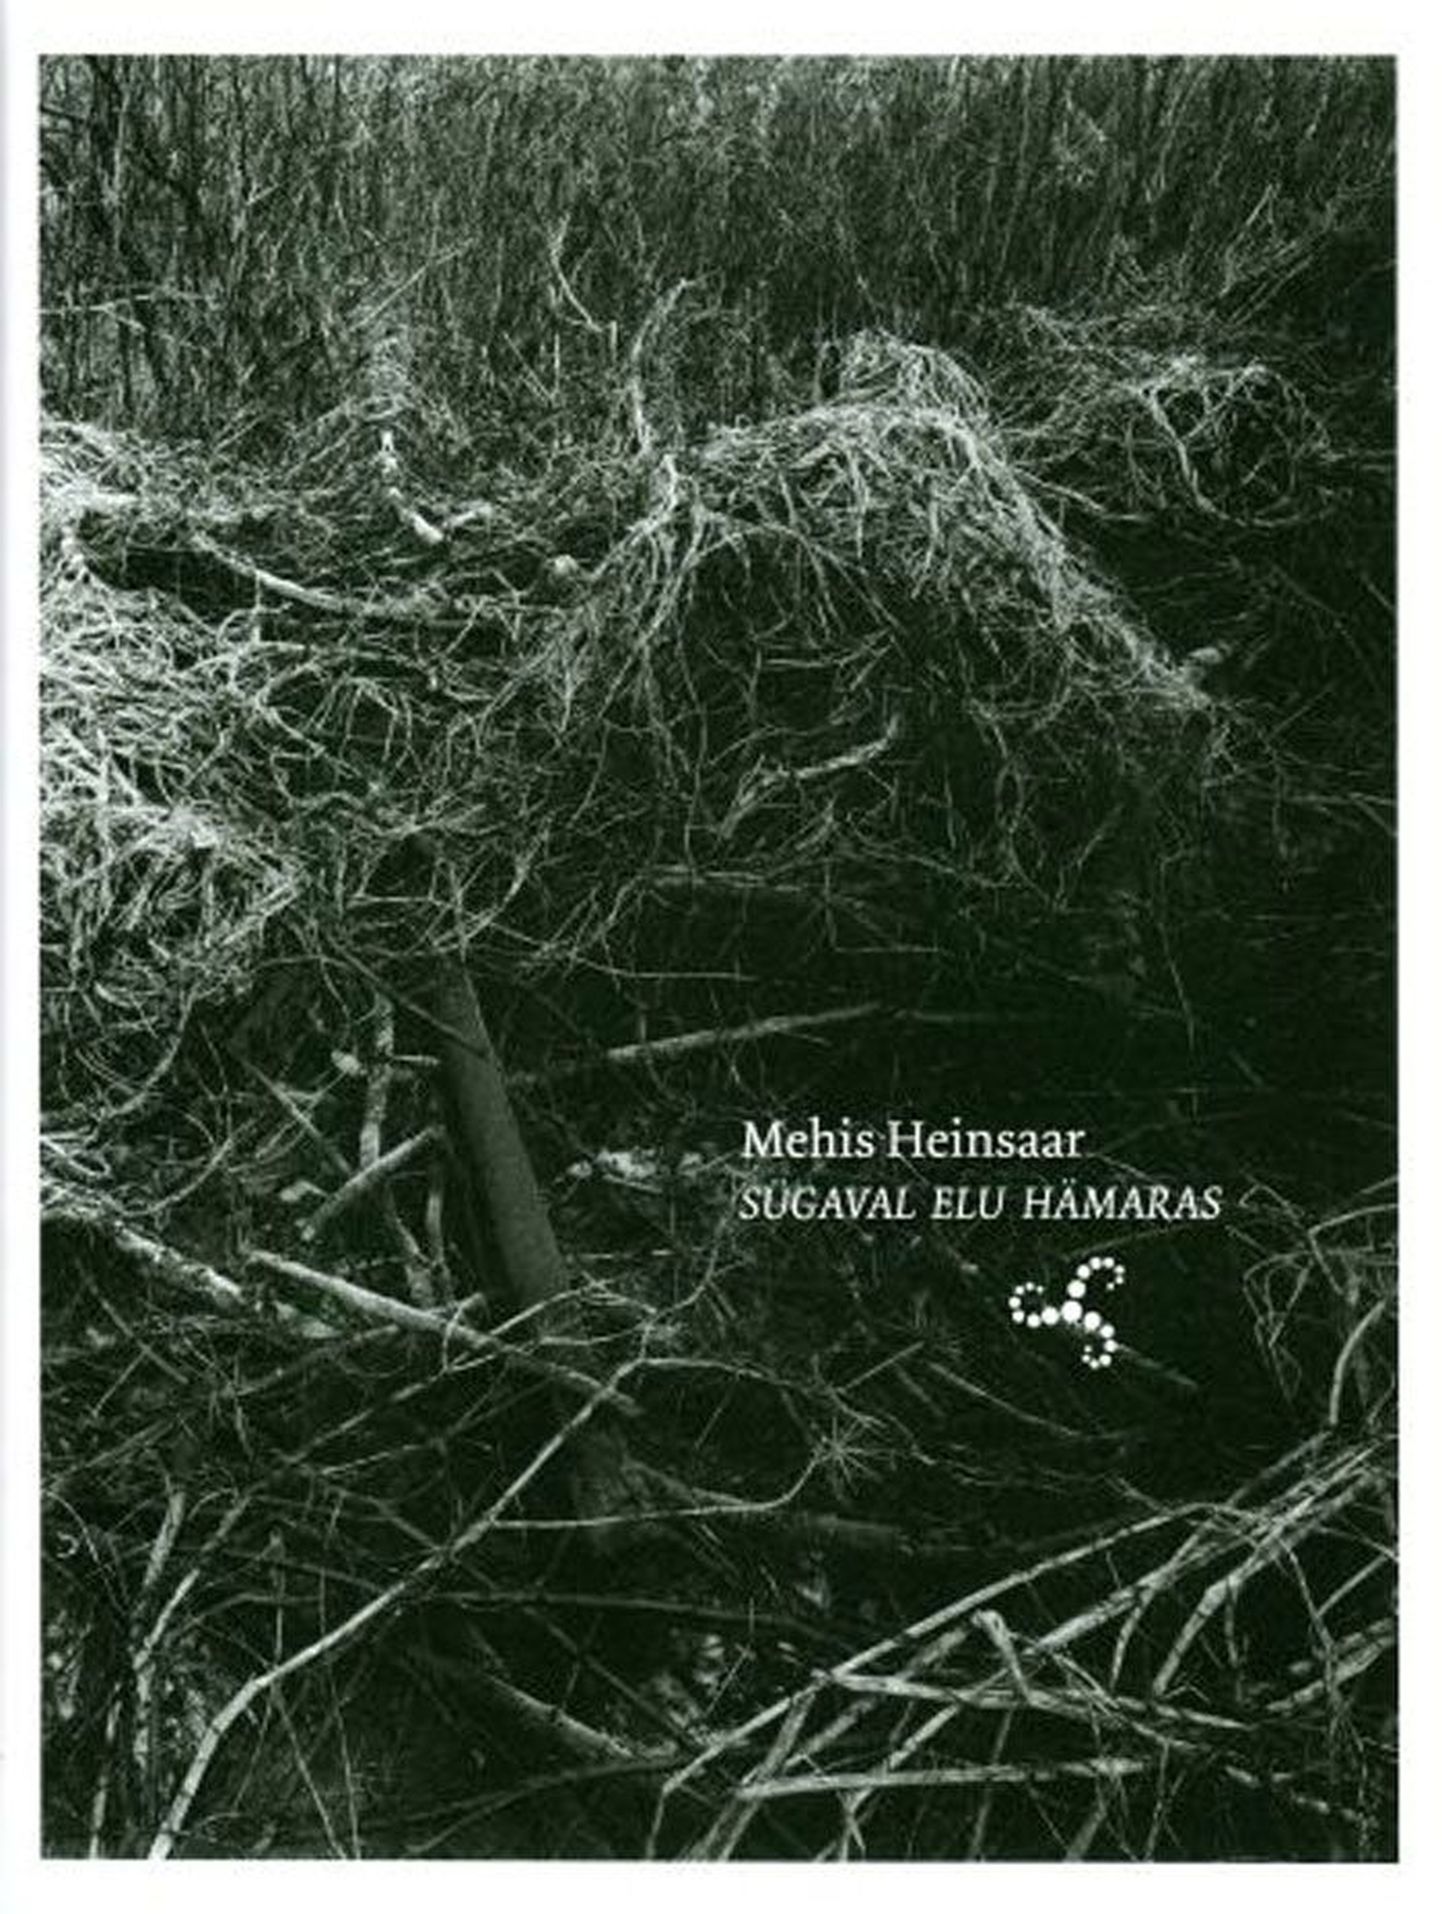 Mehis Heinsaar
«Sügaval elu hämaras»
Verb, 2009